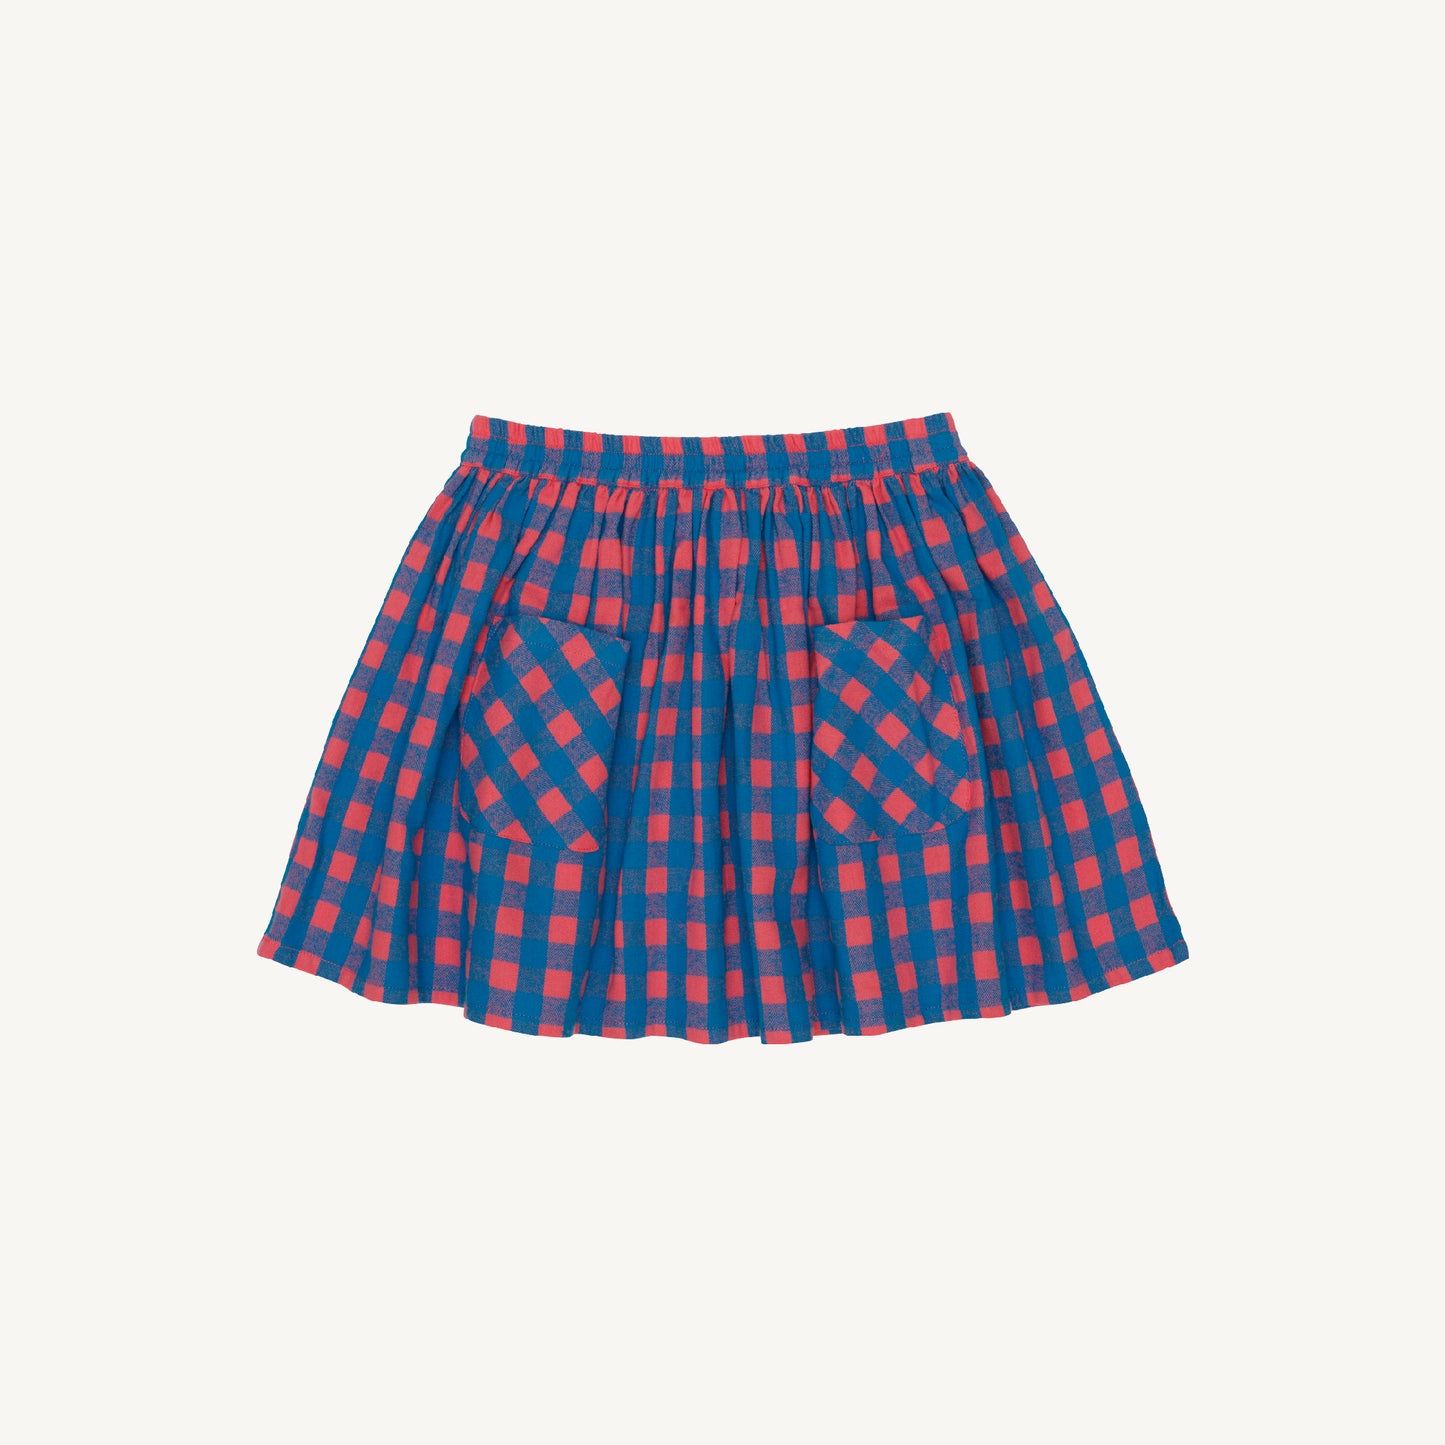 Twirl Skirt - Pink/Blue Check